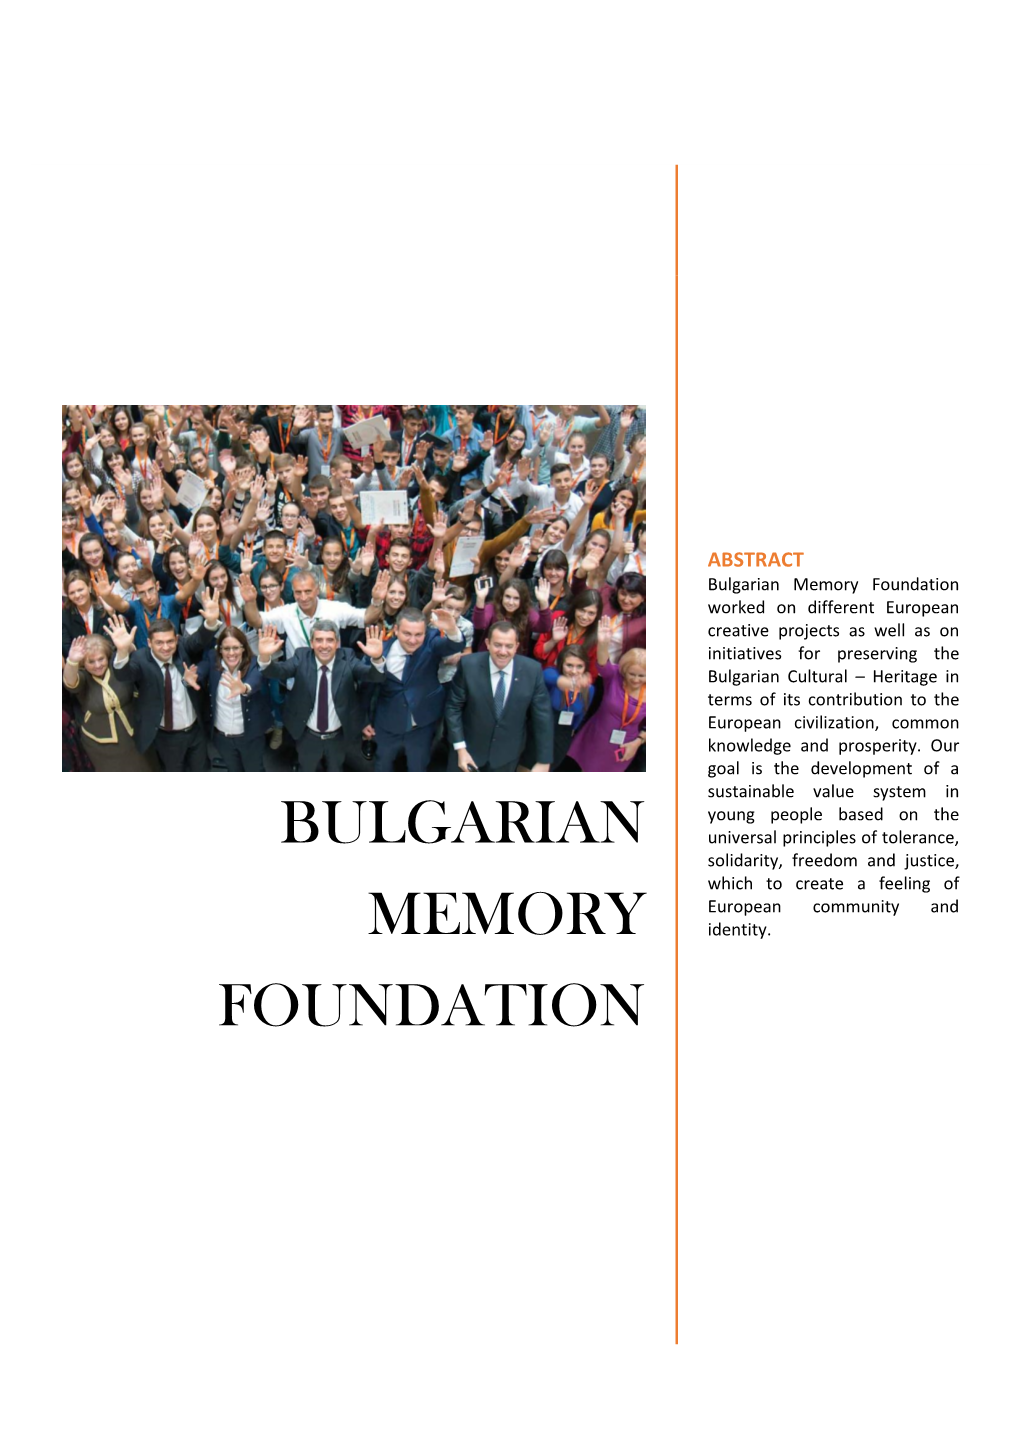 Bulgarian Memory Foundation